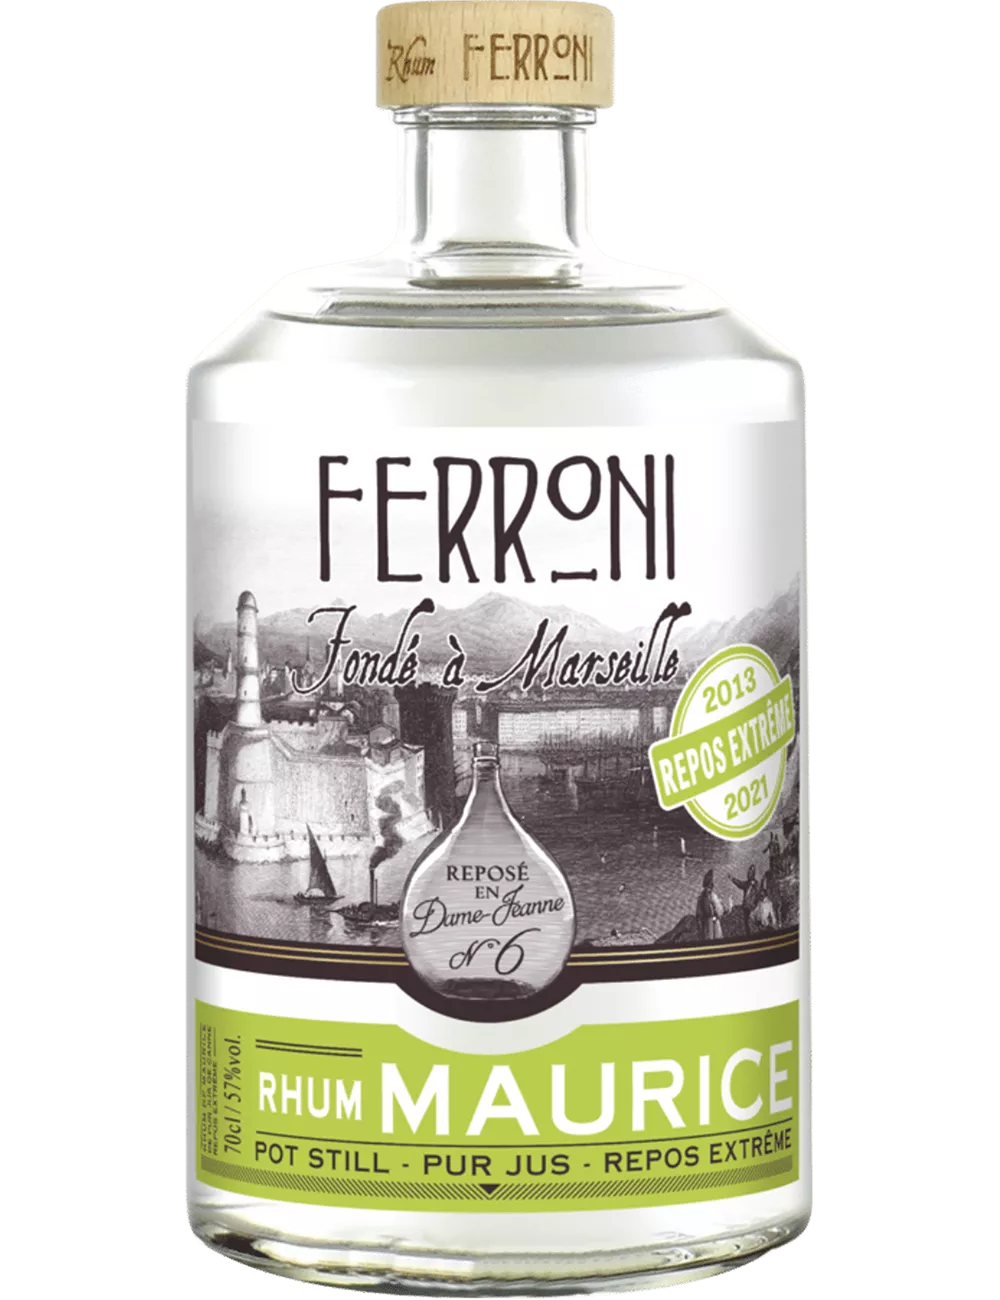 Ferroni - Dame Jeanne - N°6 Maurice - Repos extrême - Rhum 100% pur jus de canne blanc